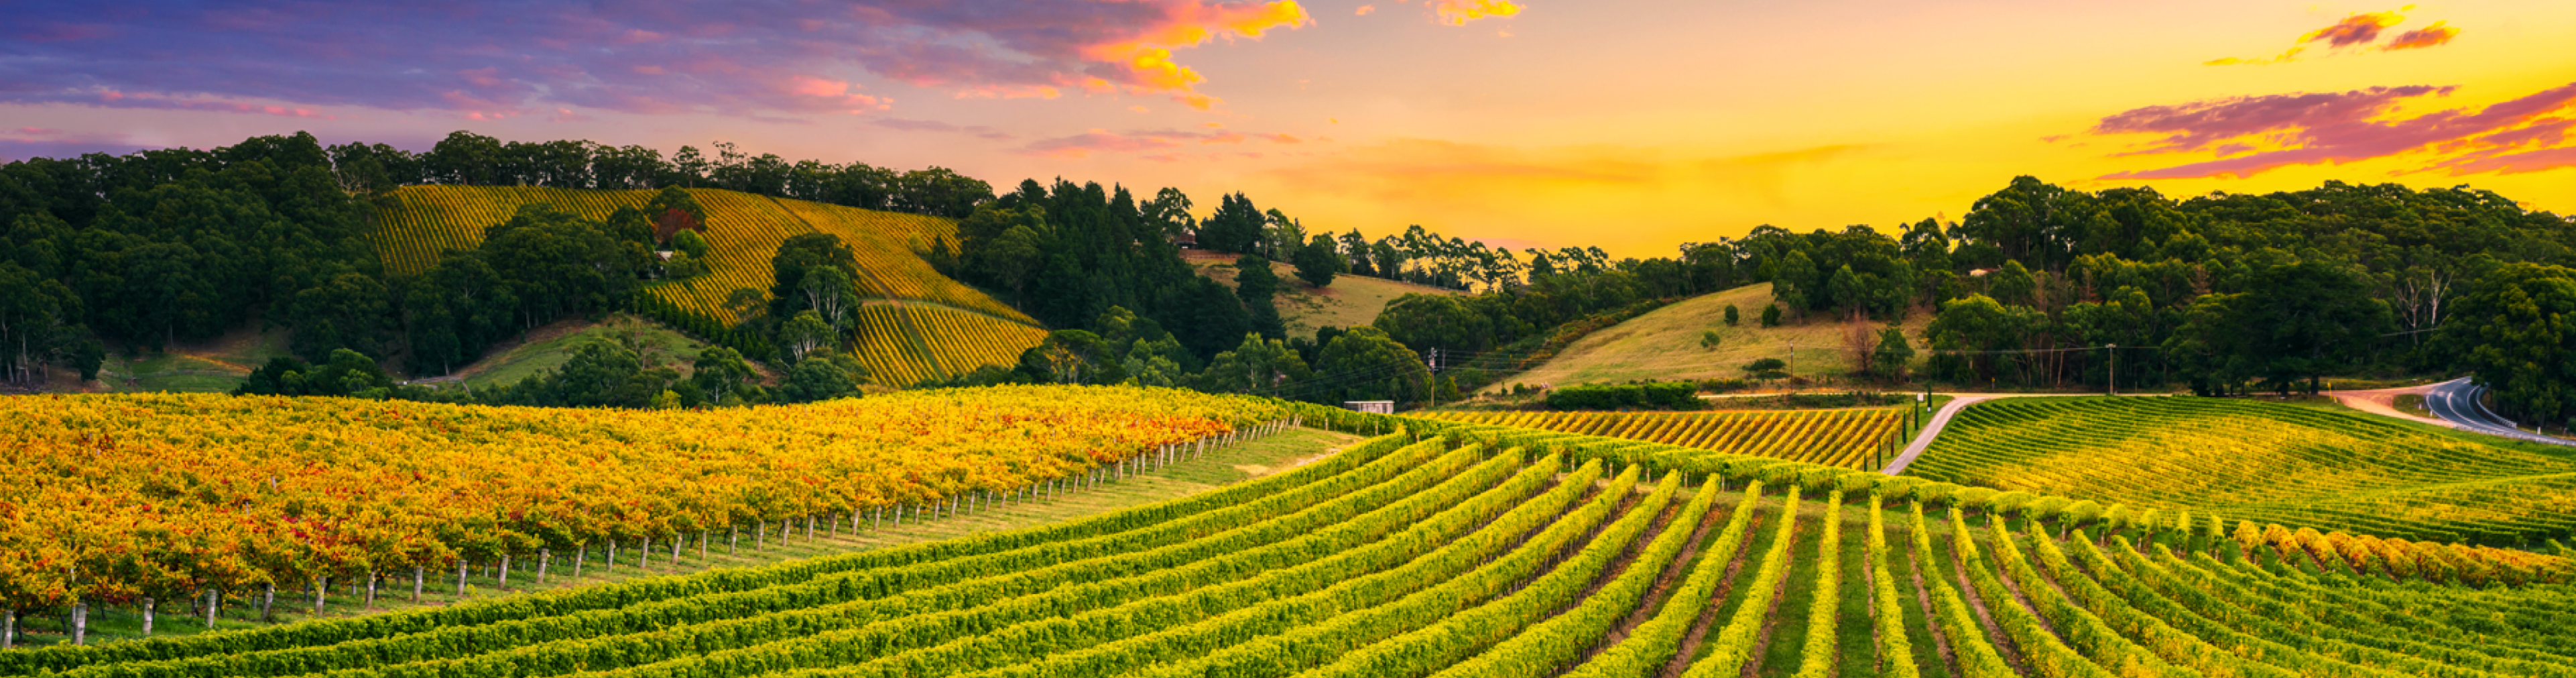 A wine vineyard at sunrise